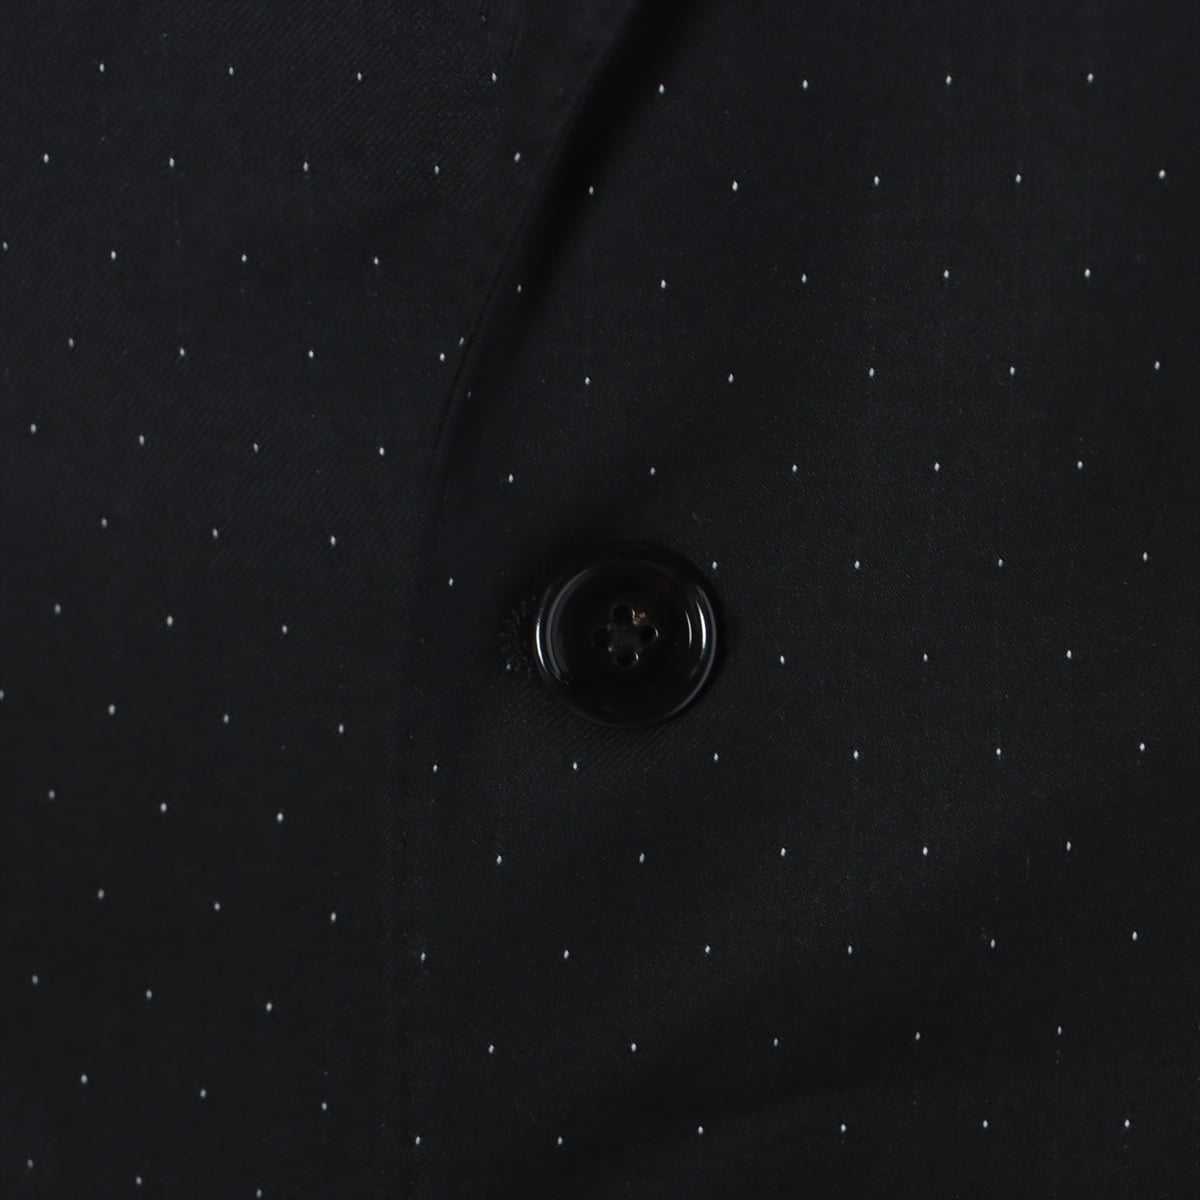 Dolce & Gabbana Wool Tailored jacket 46 Men's Black  Dot pattern